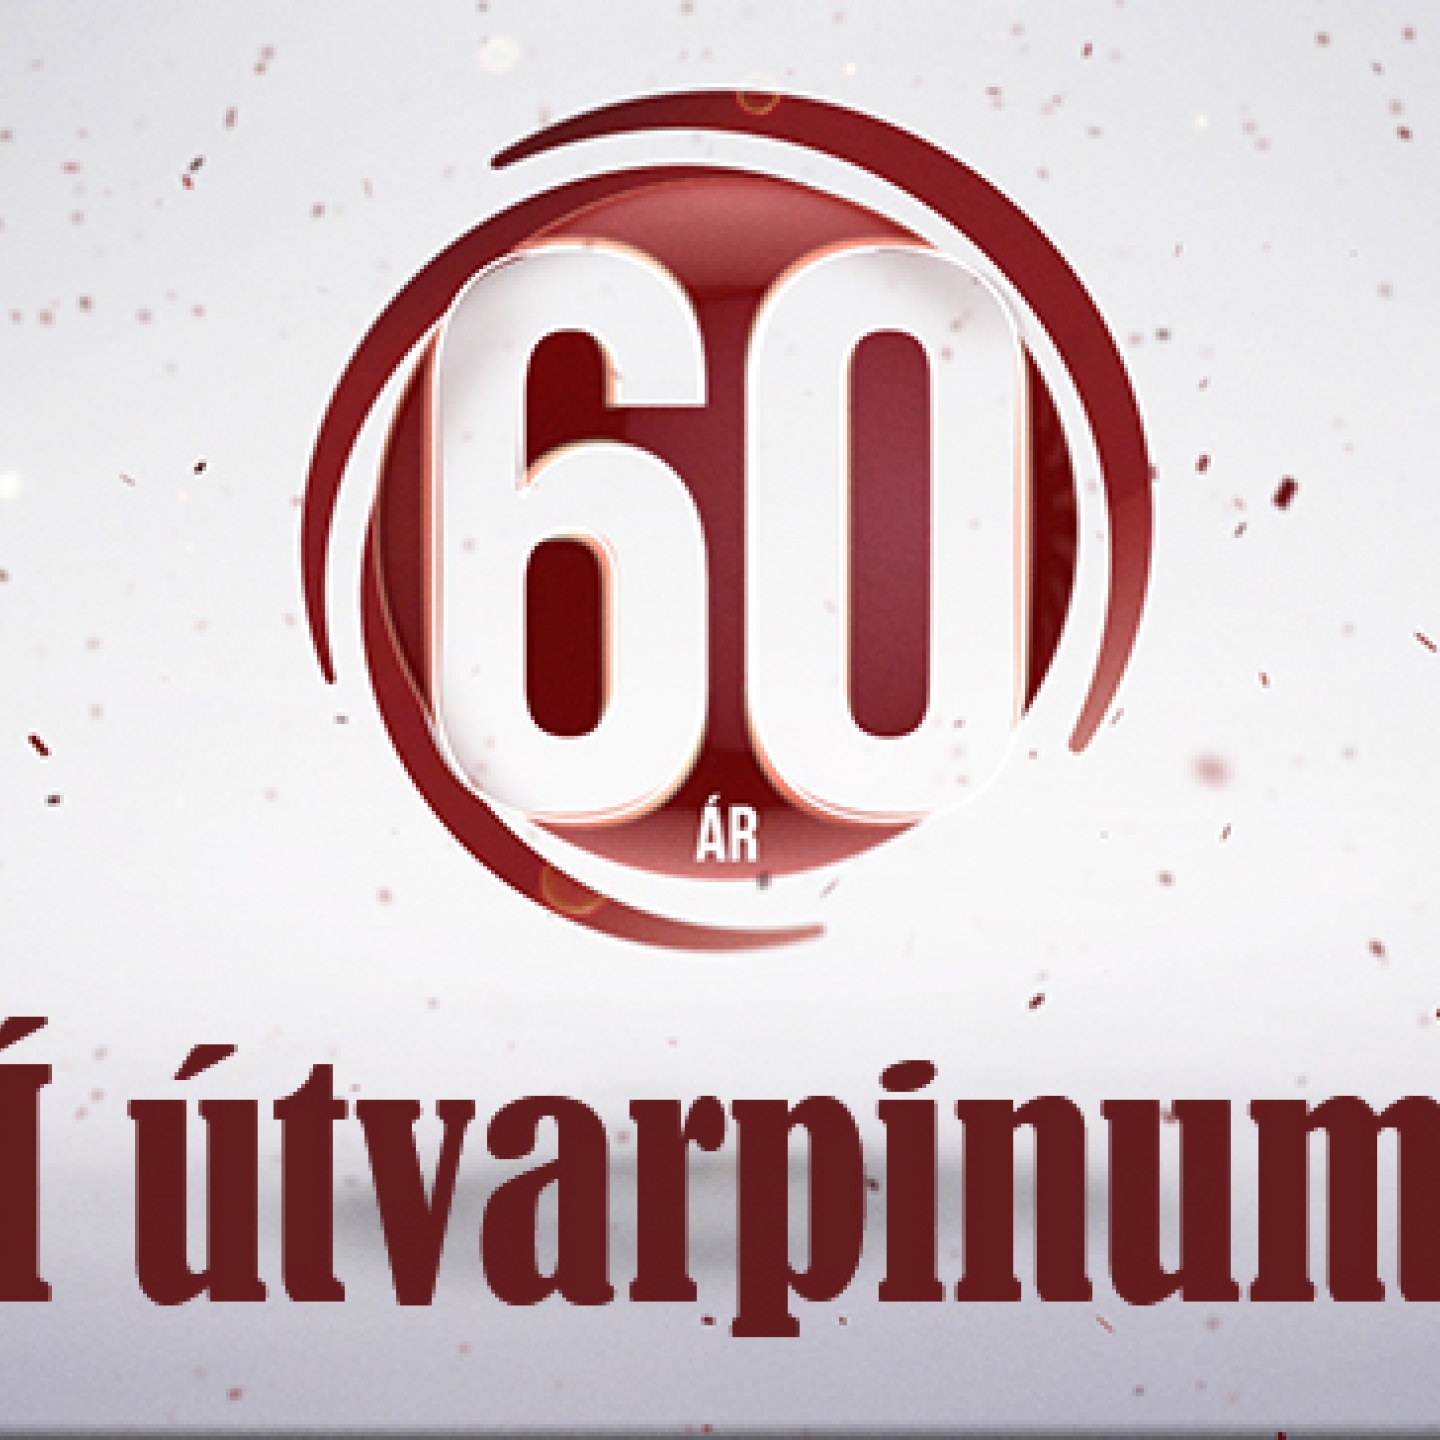 KvF 60 ár, útvarp:Kringvarp Føroya